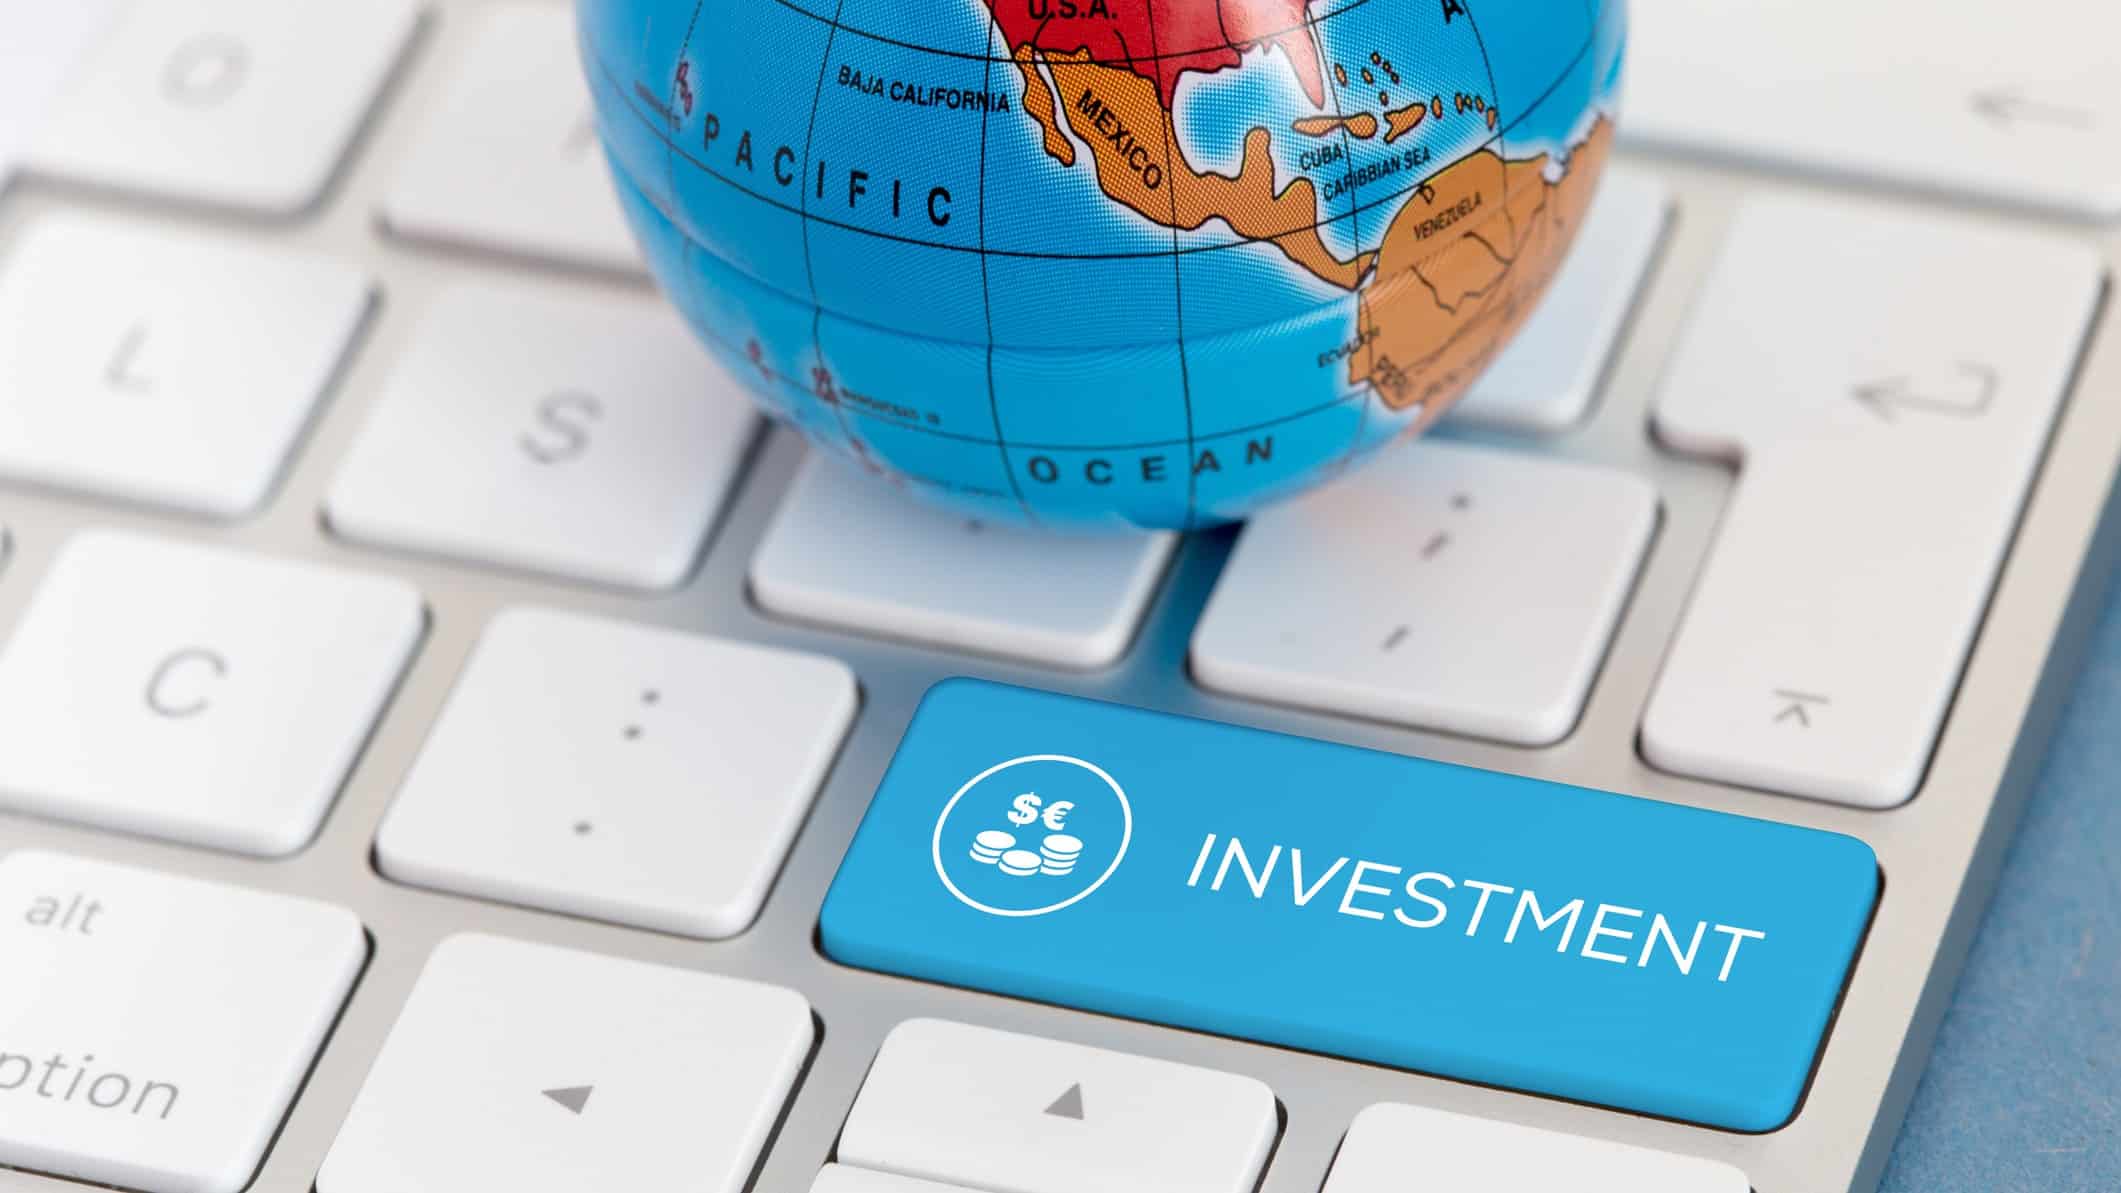 Globe on keyboard with investment key, international shares